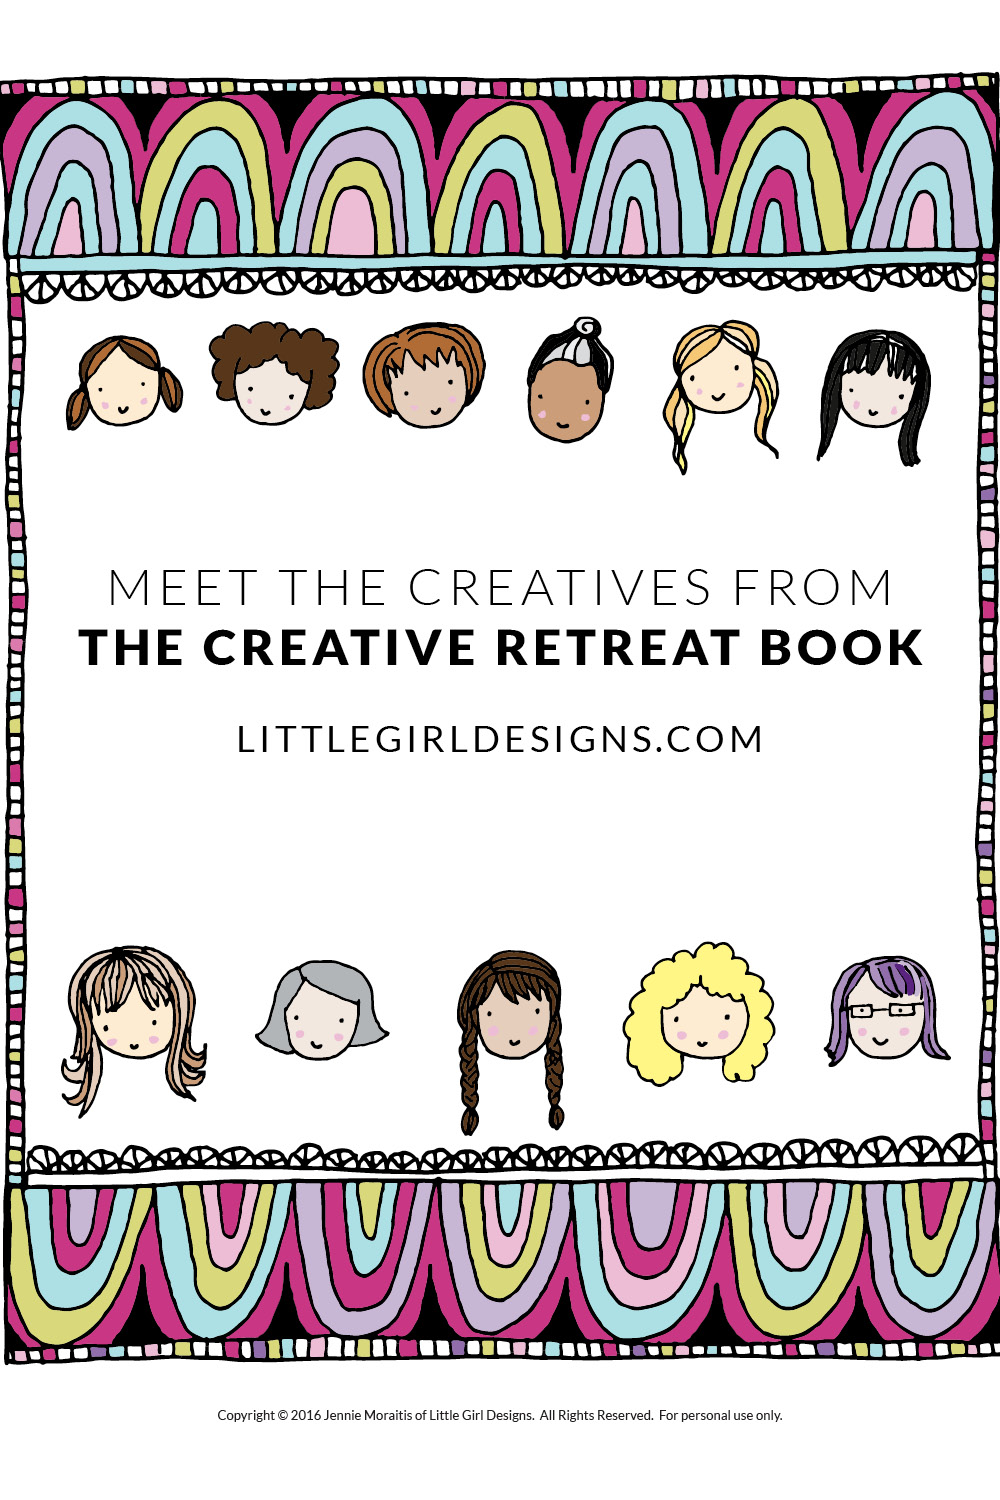 Meet the Creatives of The Creative Retreat Book